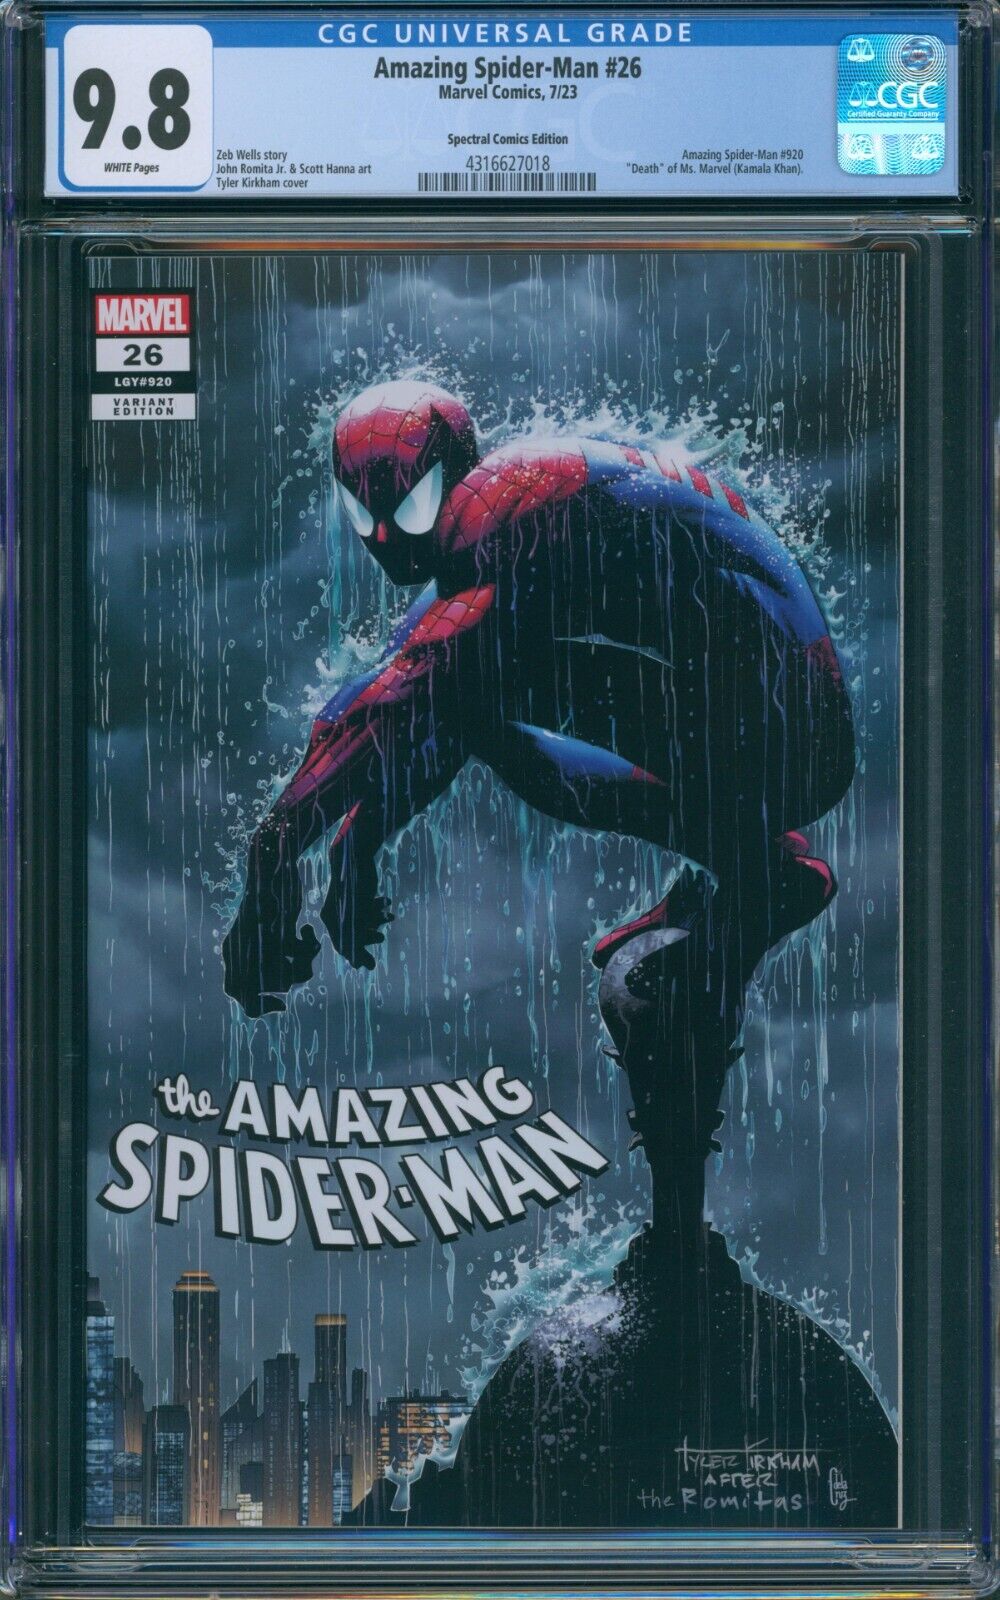 Amazing Spider-Man #26 (#920) Kirkham Spectral Comics Edition - CGC 9.8!!